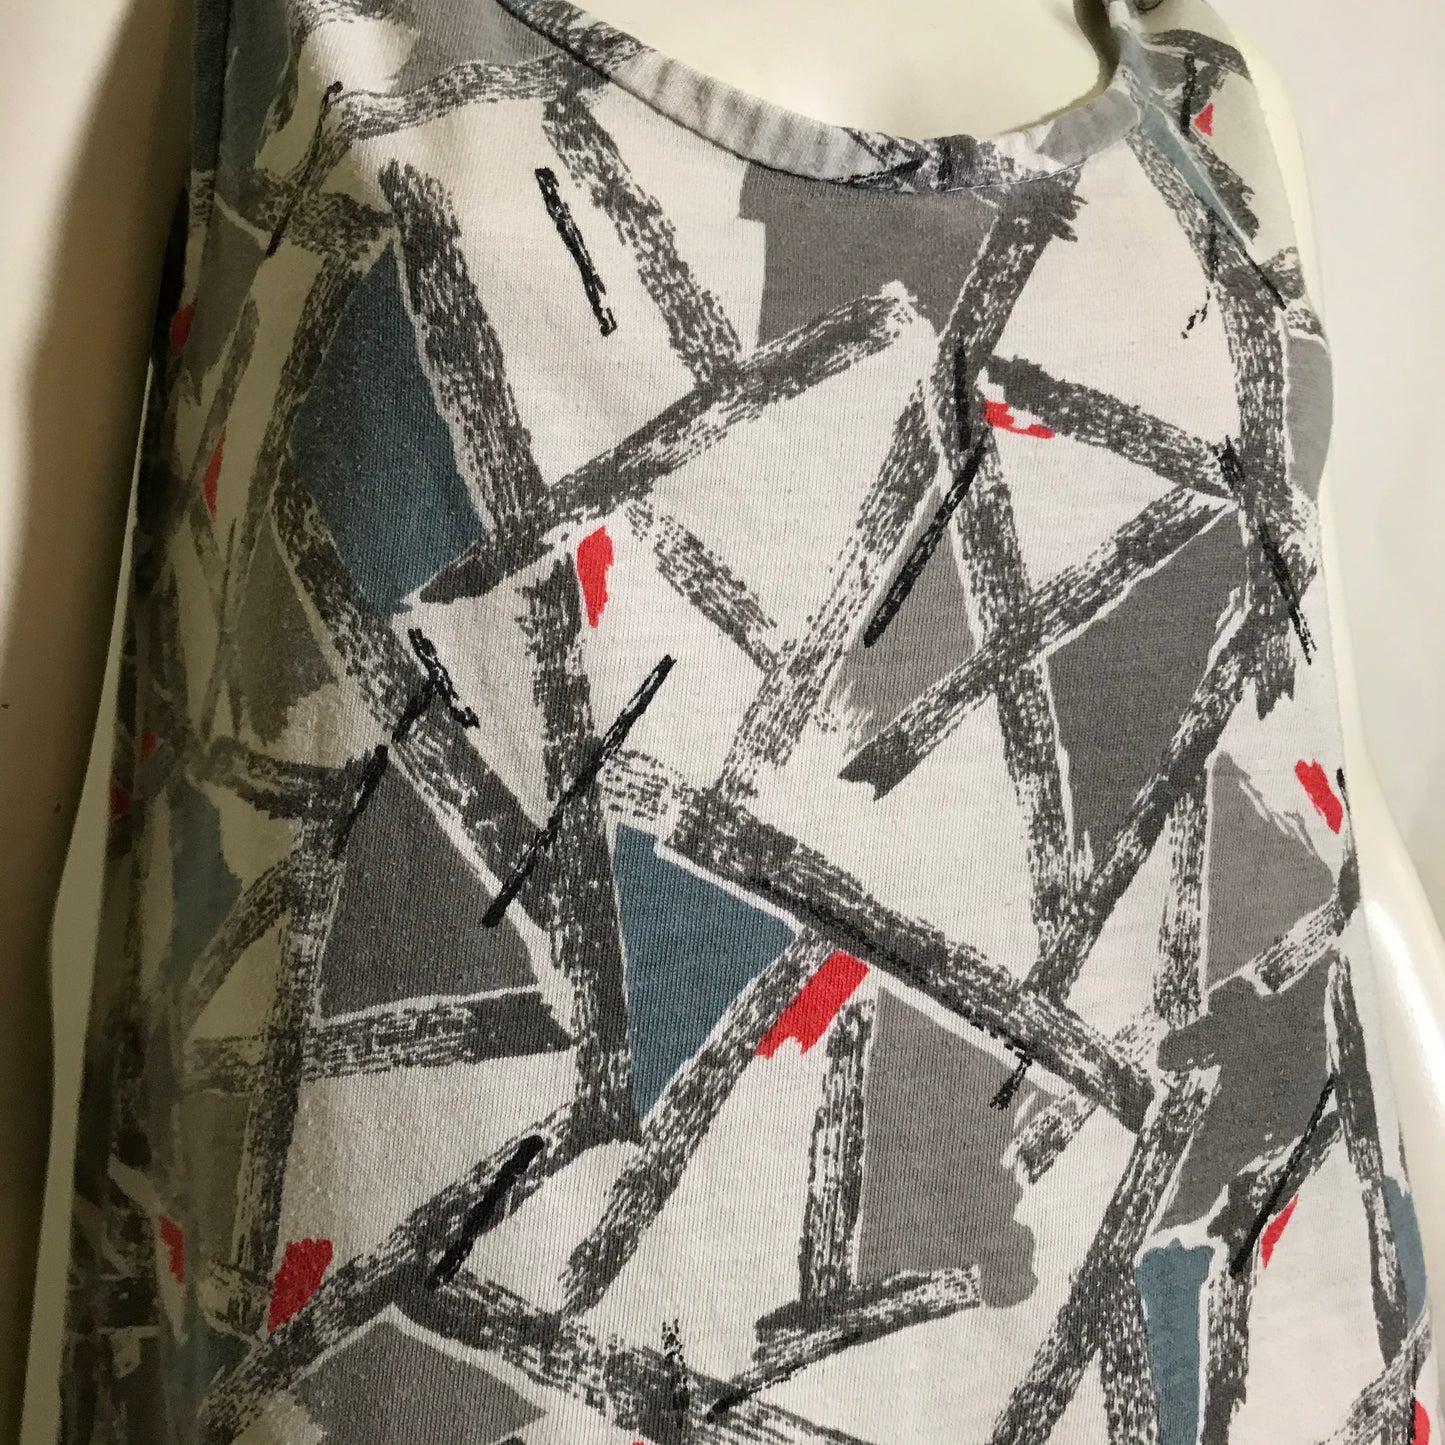 Abstract Art Knit Tank Top Shirt circa 1980s